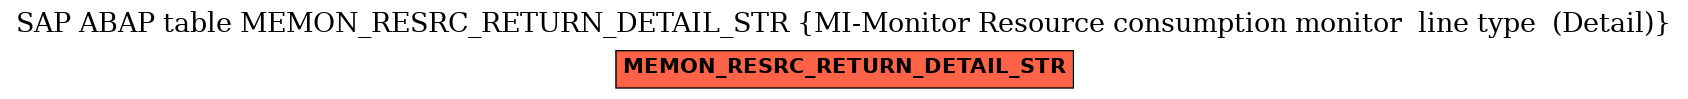 E-R Diagram for table MEMON_RESRC_RETURN_DETAIL_STR (MI-Monitor Resource consumption monitor  line type  (Detail))